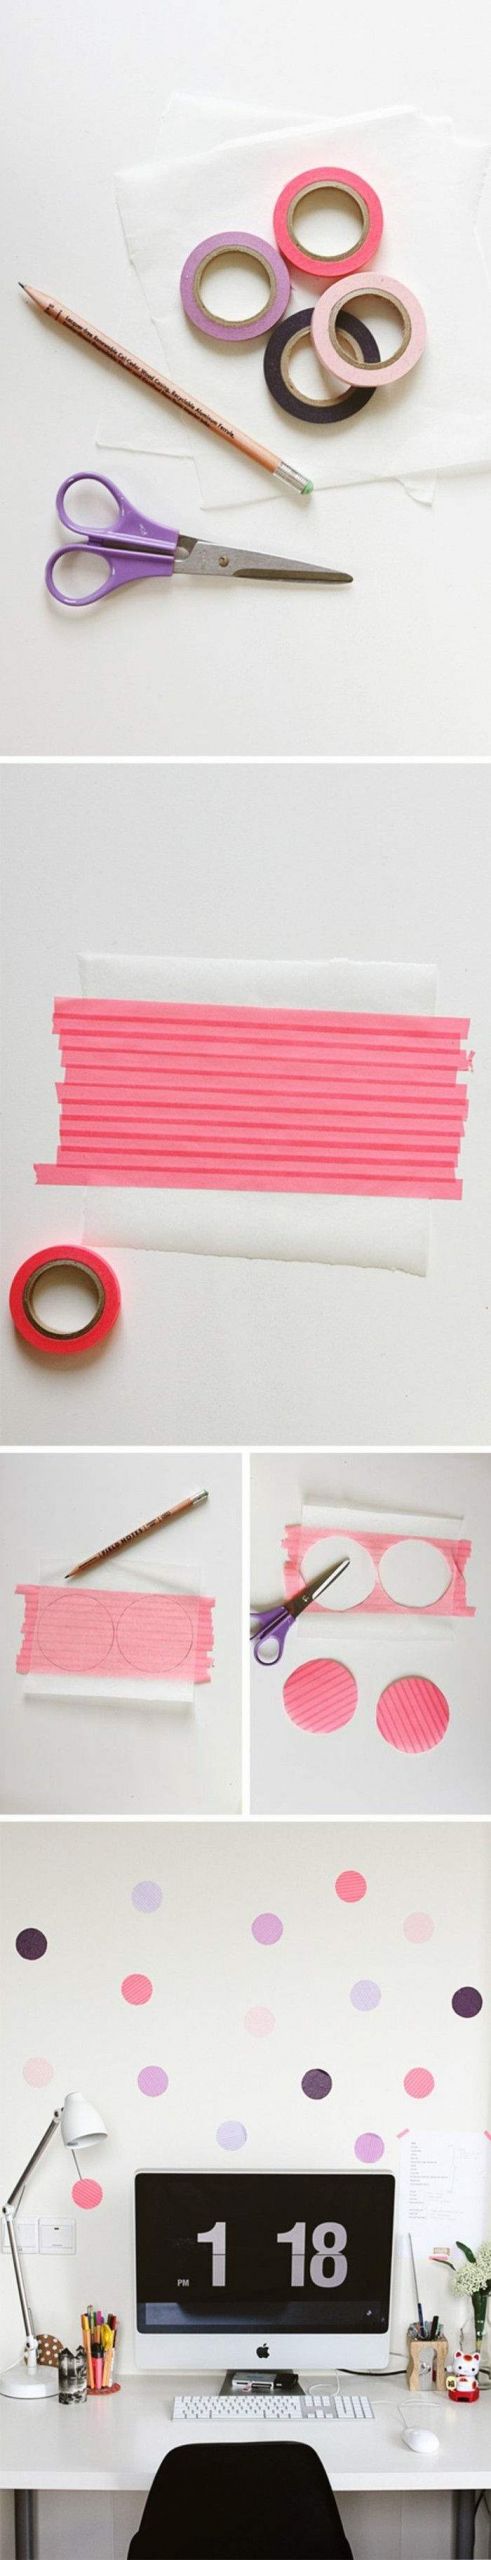 diy ideen mit washi tape wanddeko selber basteln